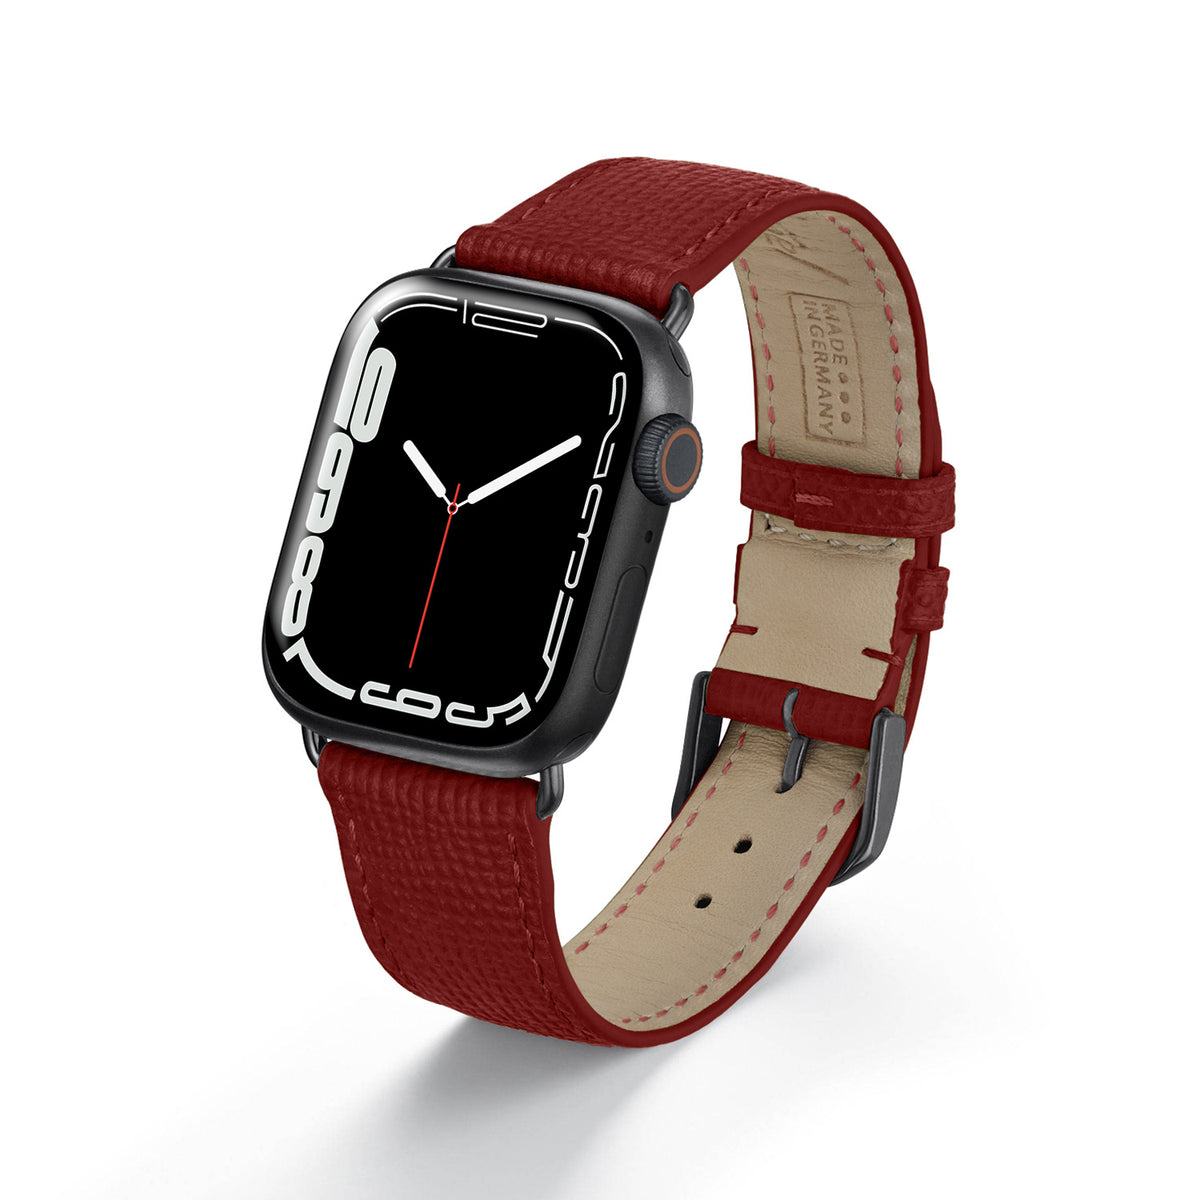 Apple Watch Uhrenarmband AvelloStrap von Happel, Rindsleder, handgefertigt, Bordeaux